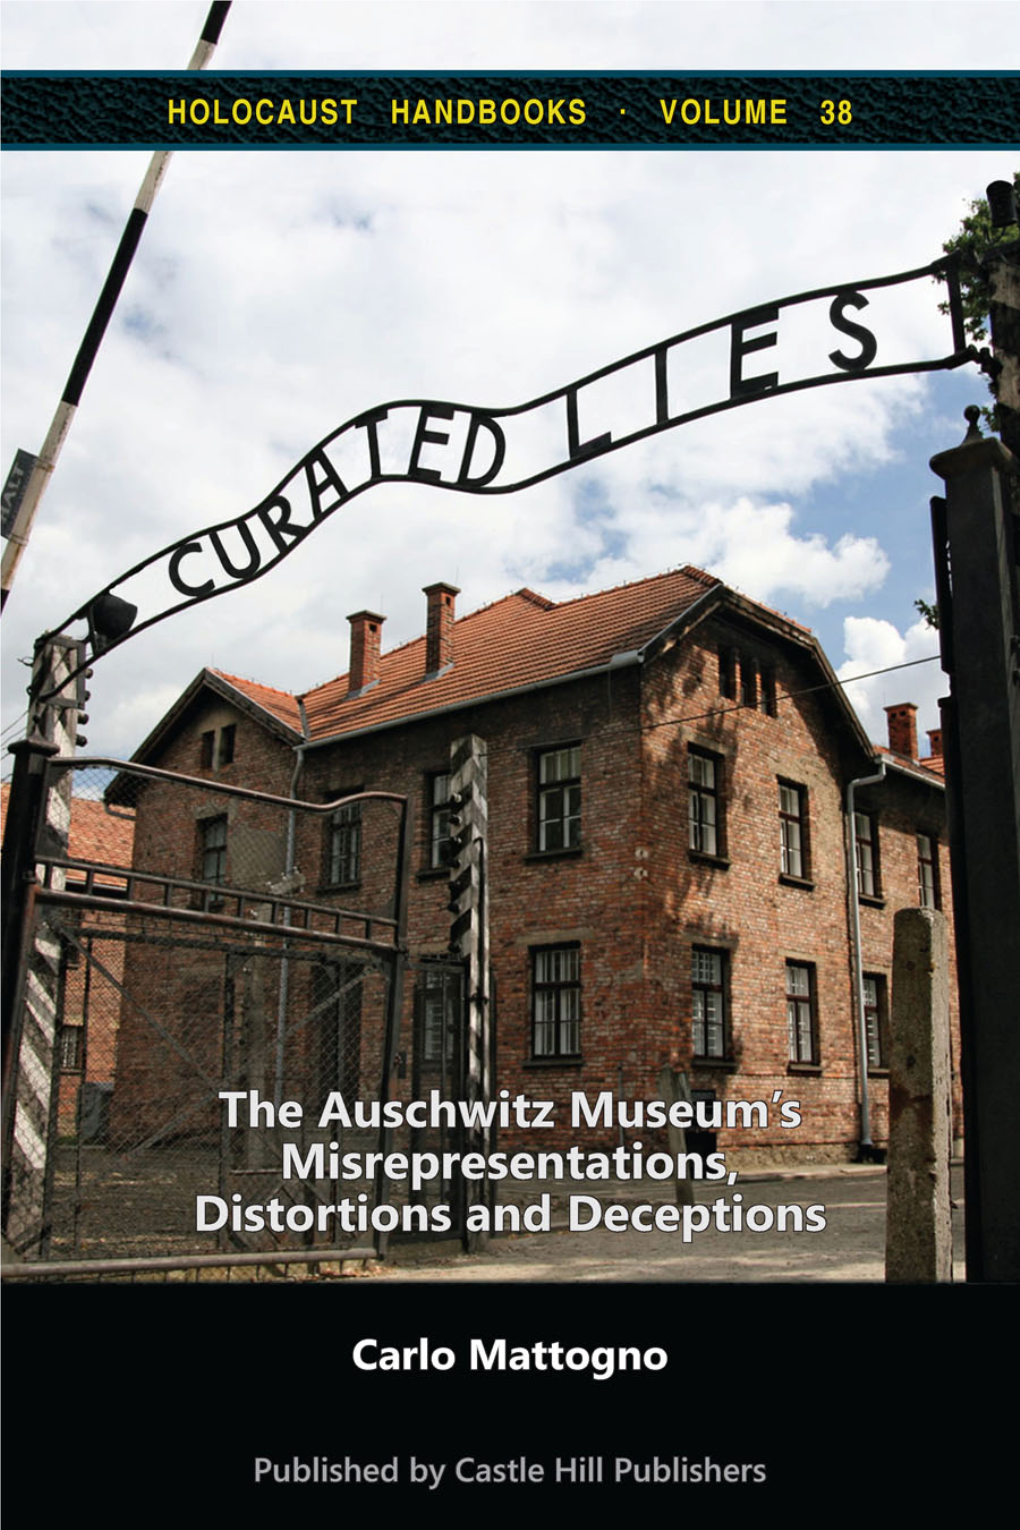 The Auschwitz Museum's Misrepresentations